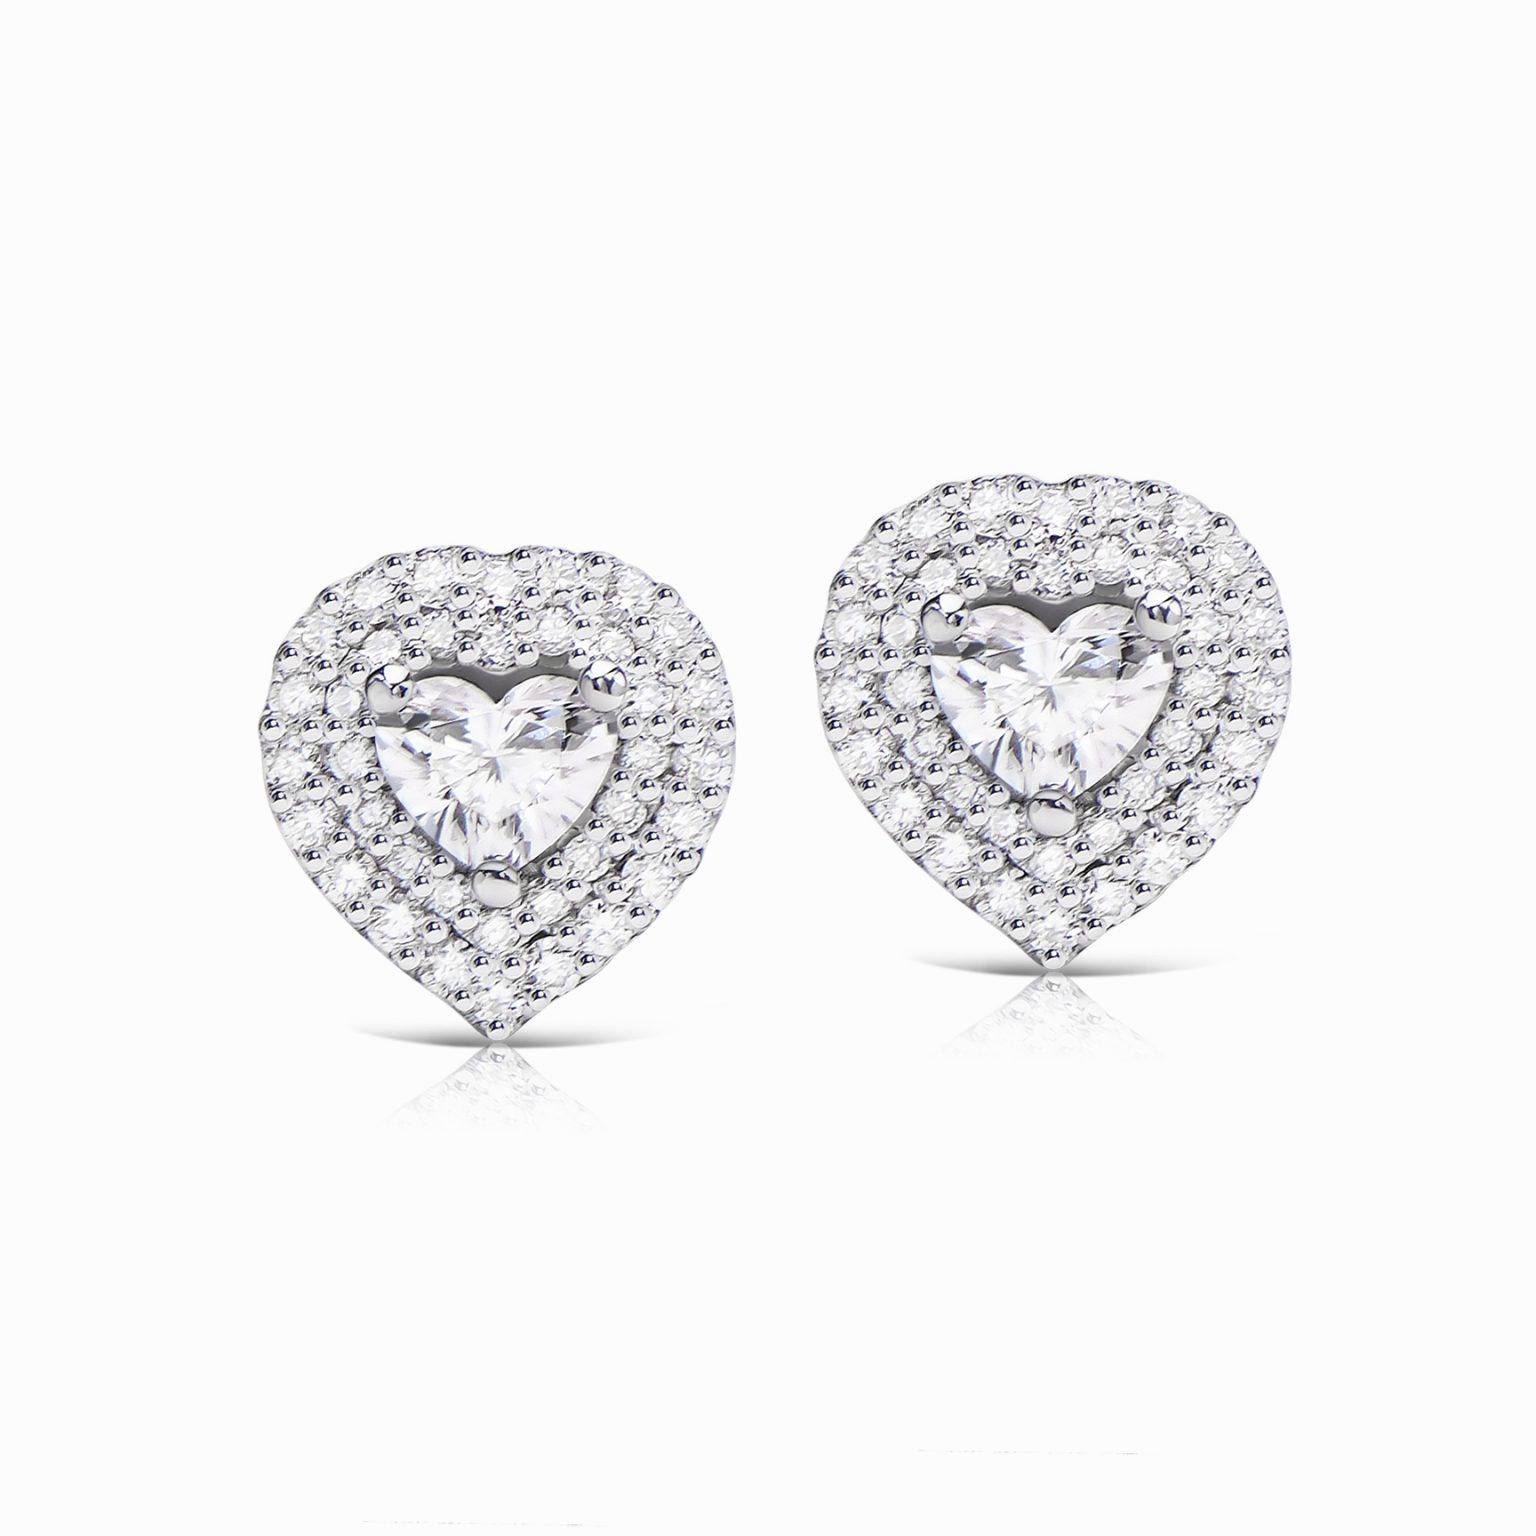 Diamond stud earrings — 2,385 ct total weight